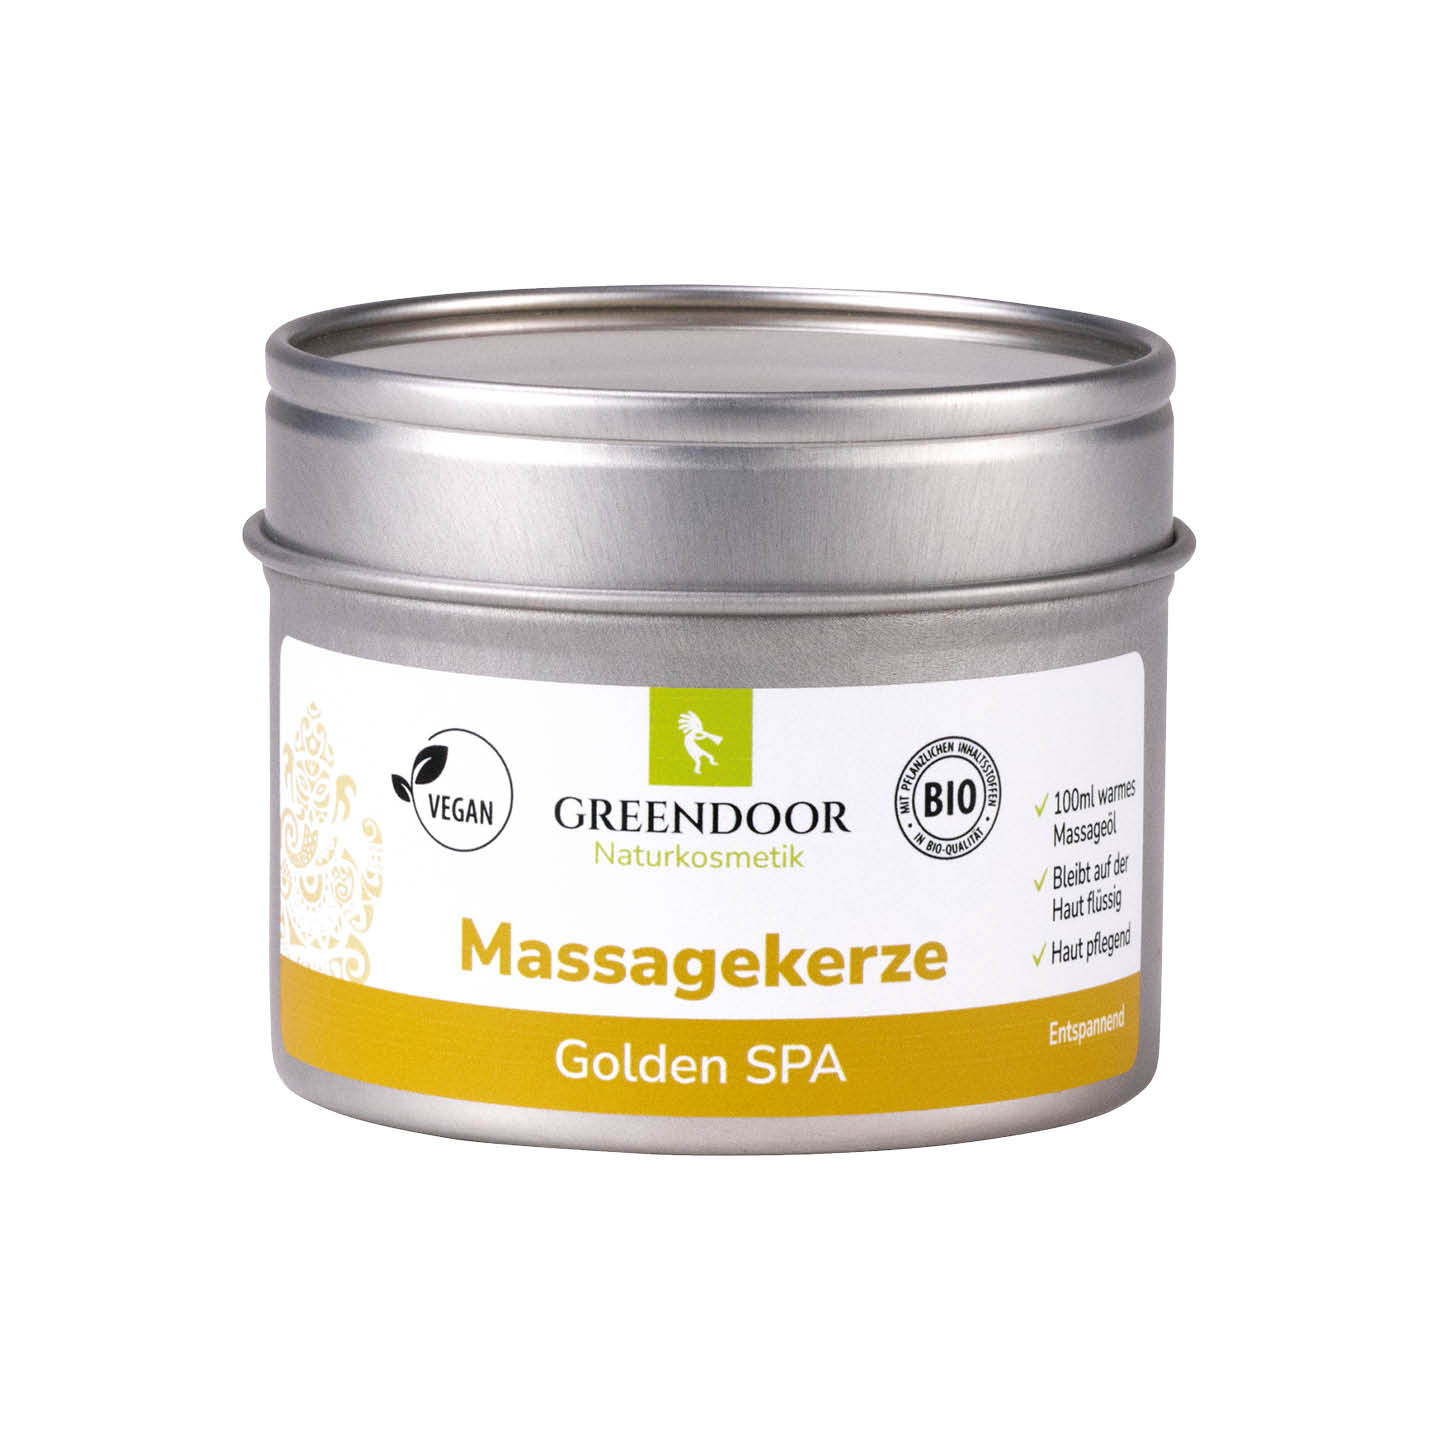 Massagekerze Golden Spa